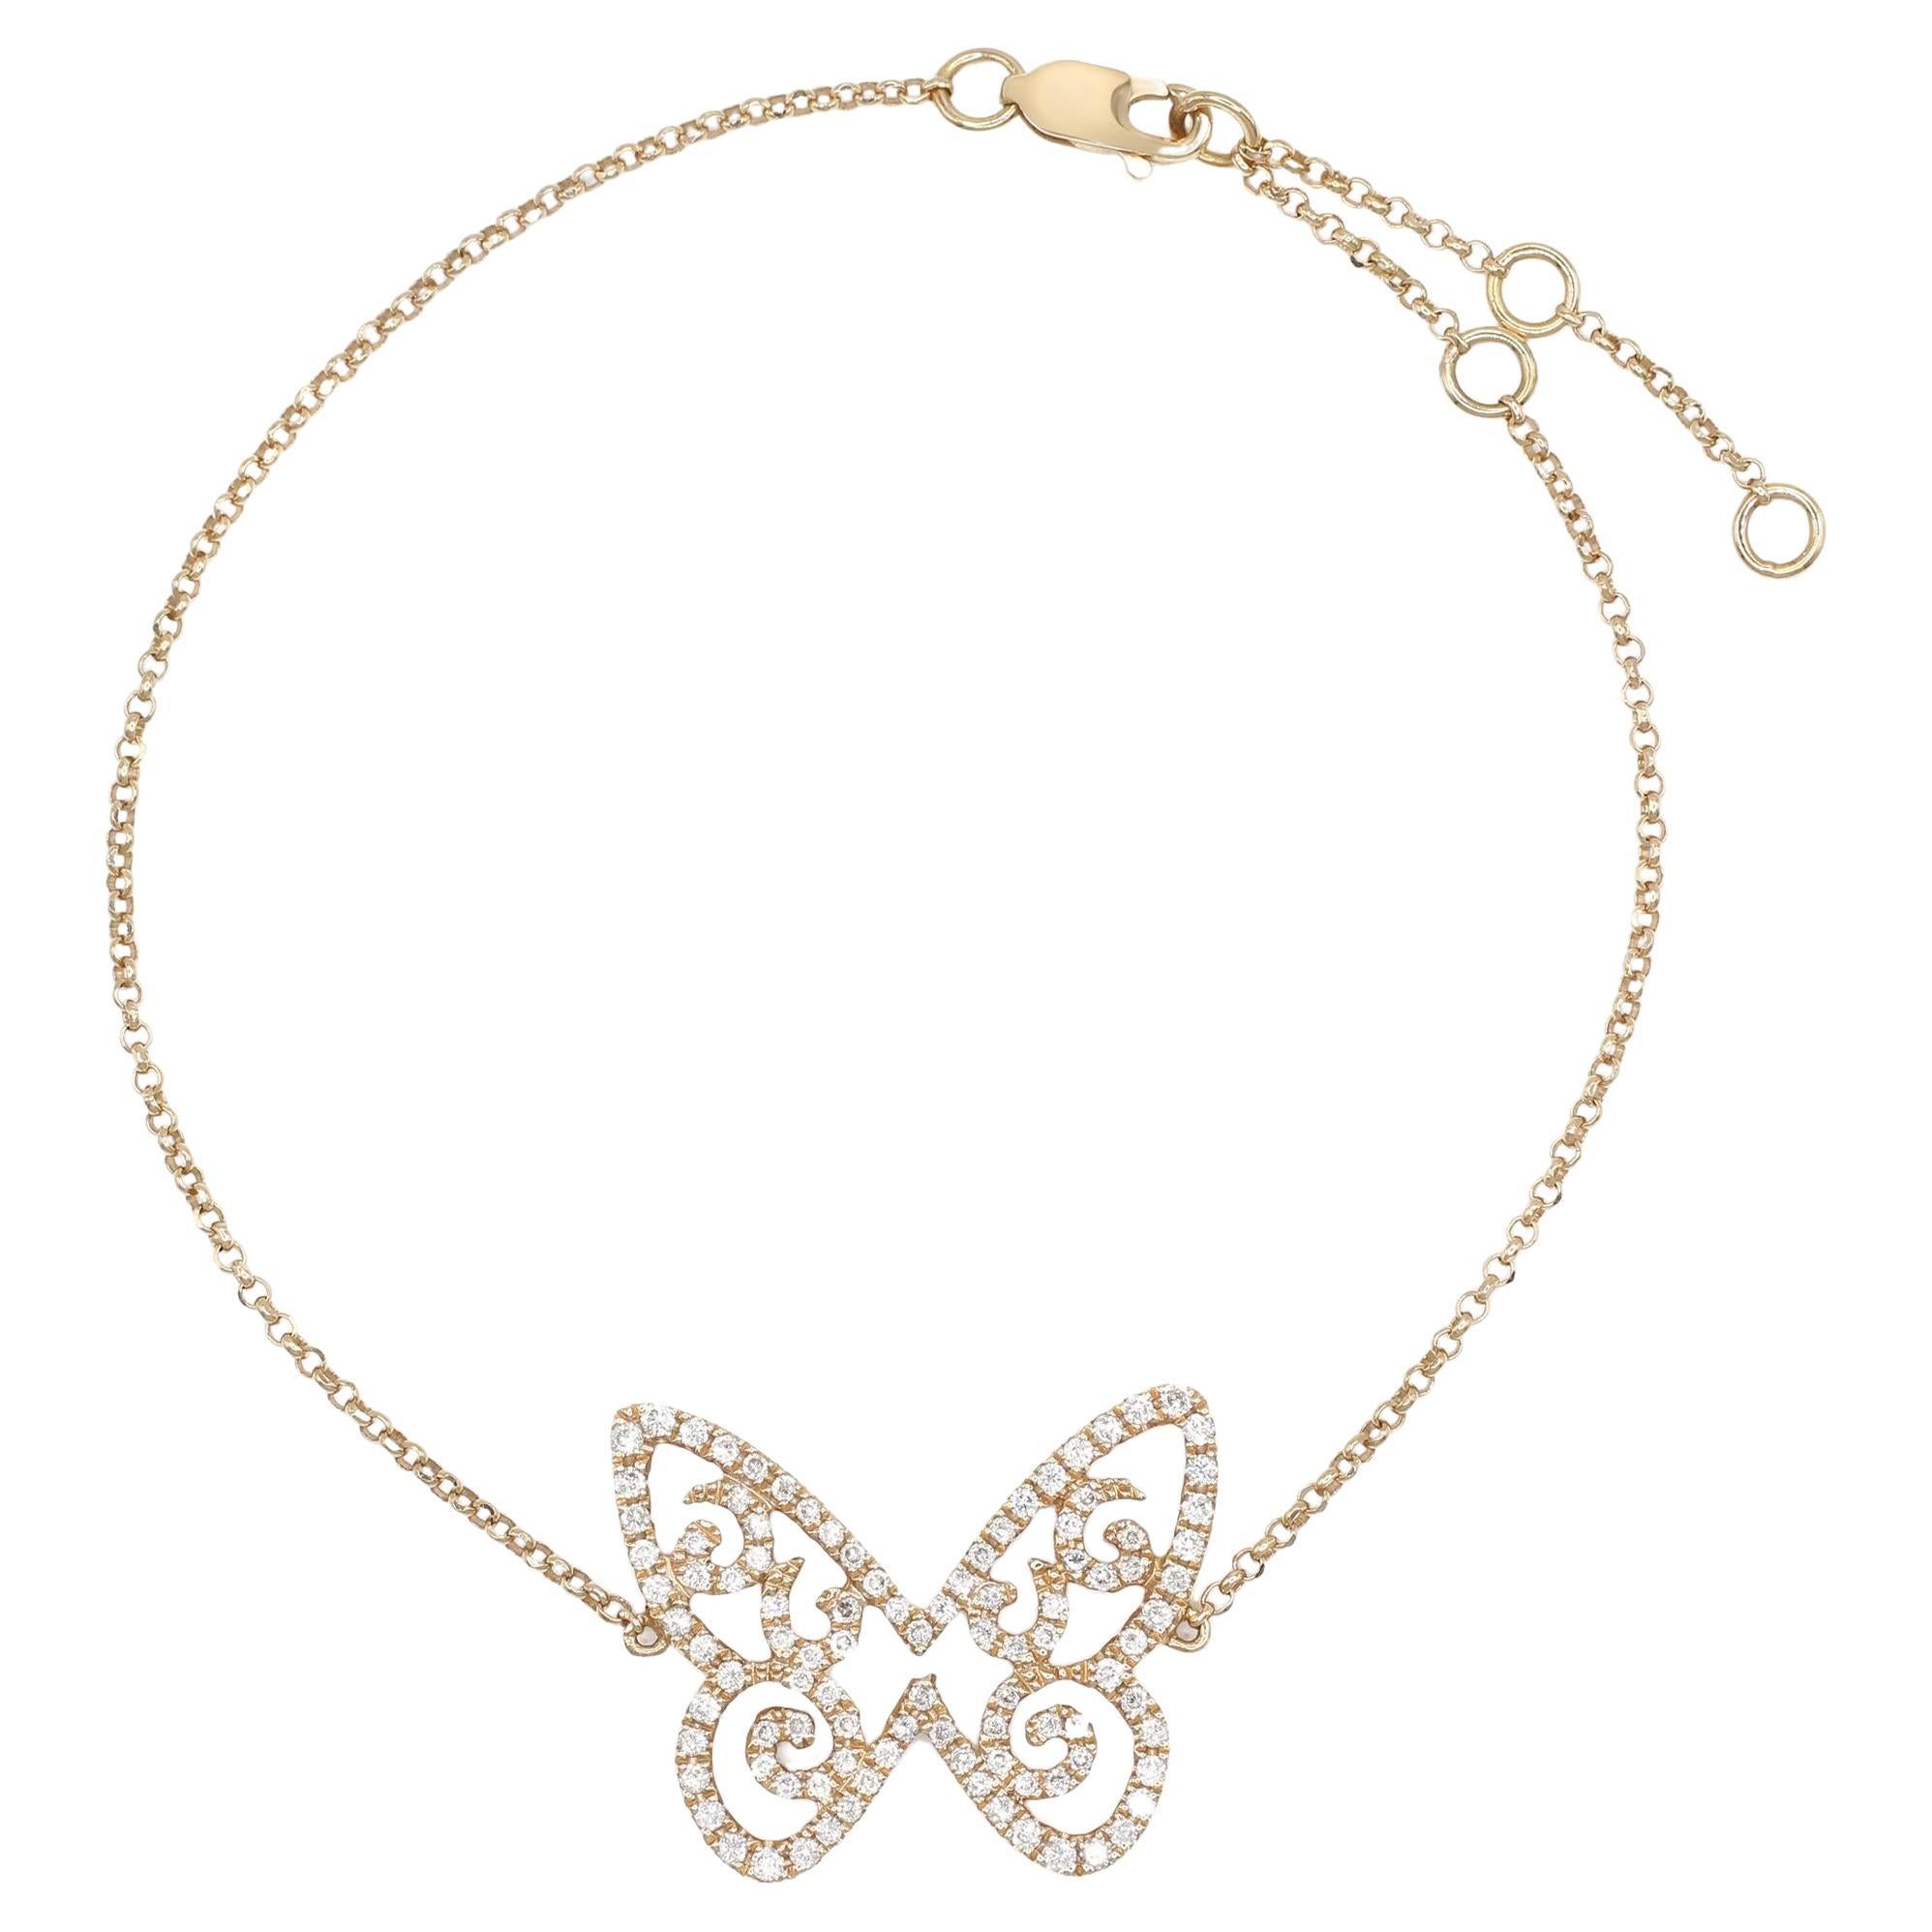 Rachel Koen Diamond Butterfly Chain Bracelet 18K Rose Gold 0.46cttw